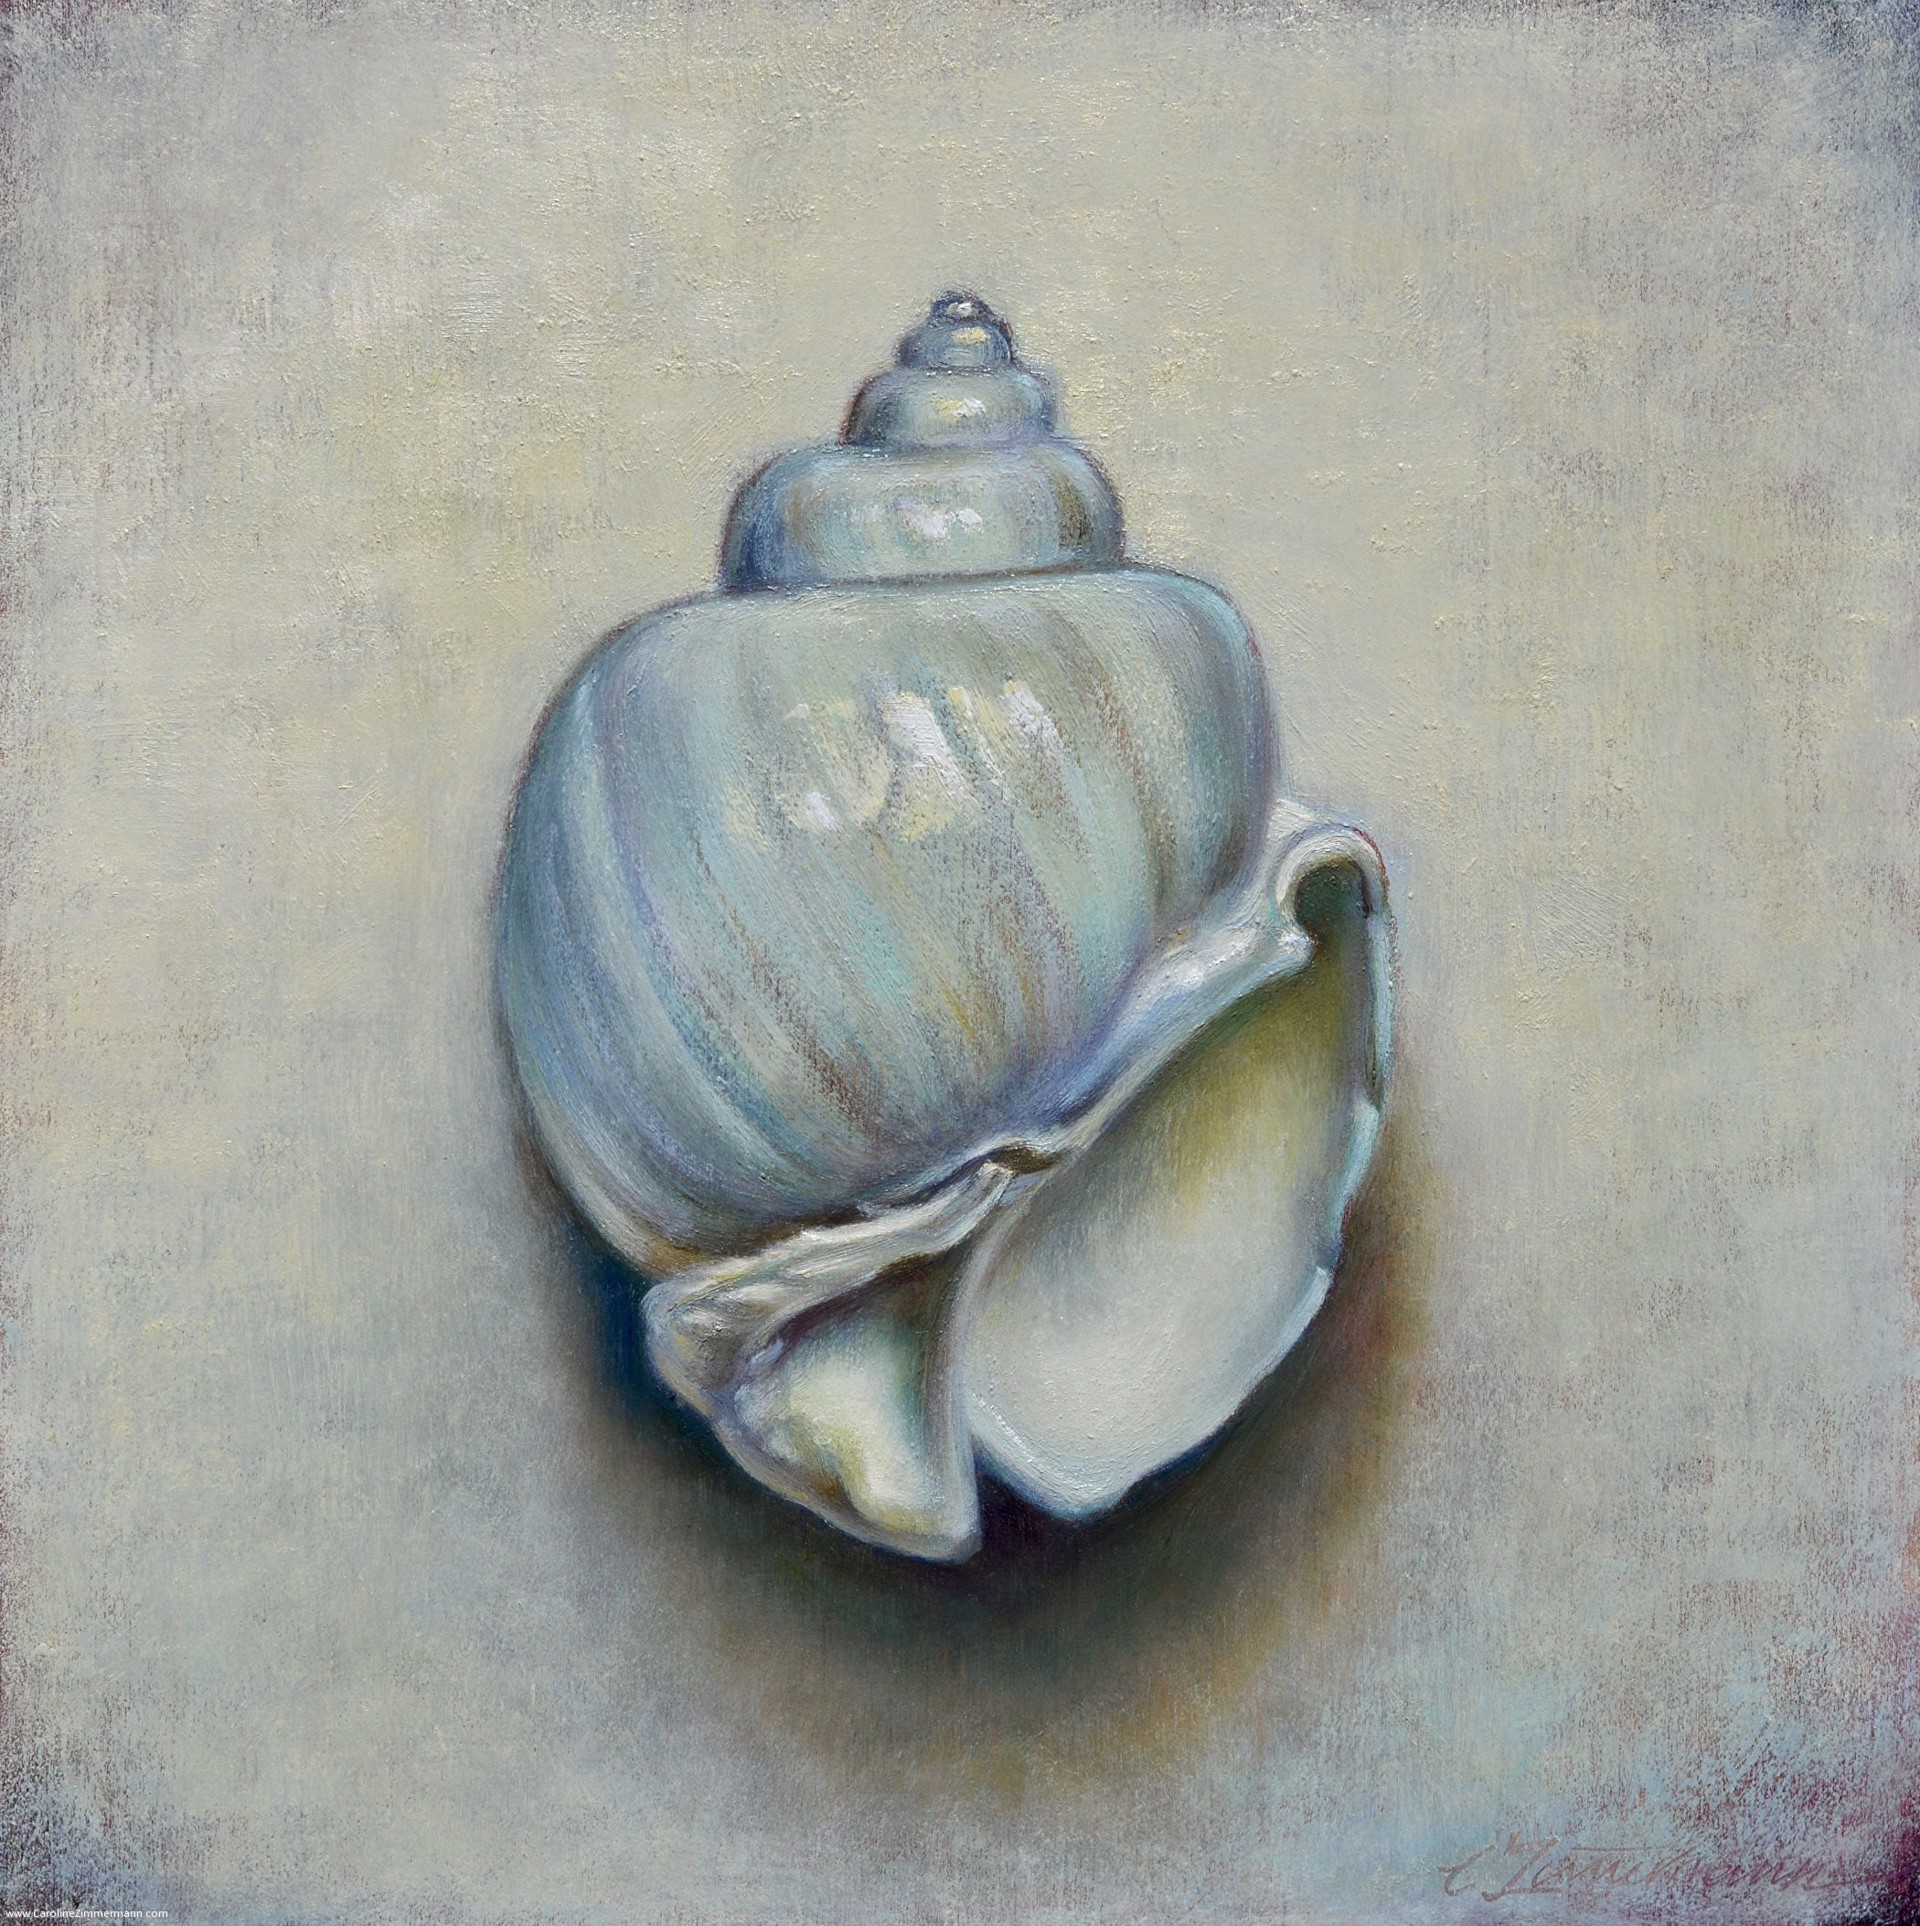 Luna Shell by Caroline Zimmermann